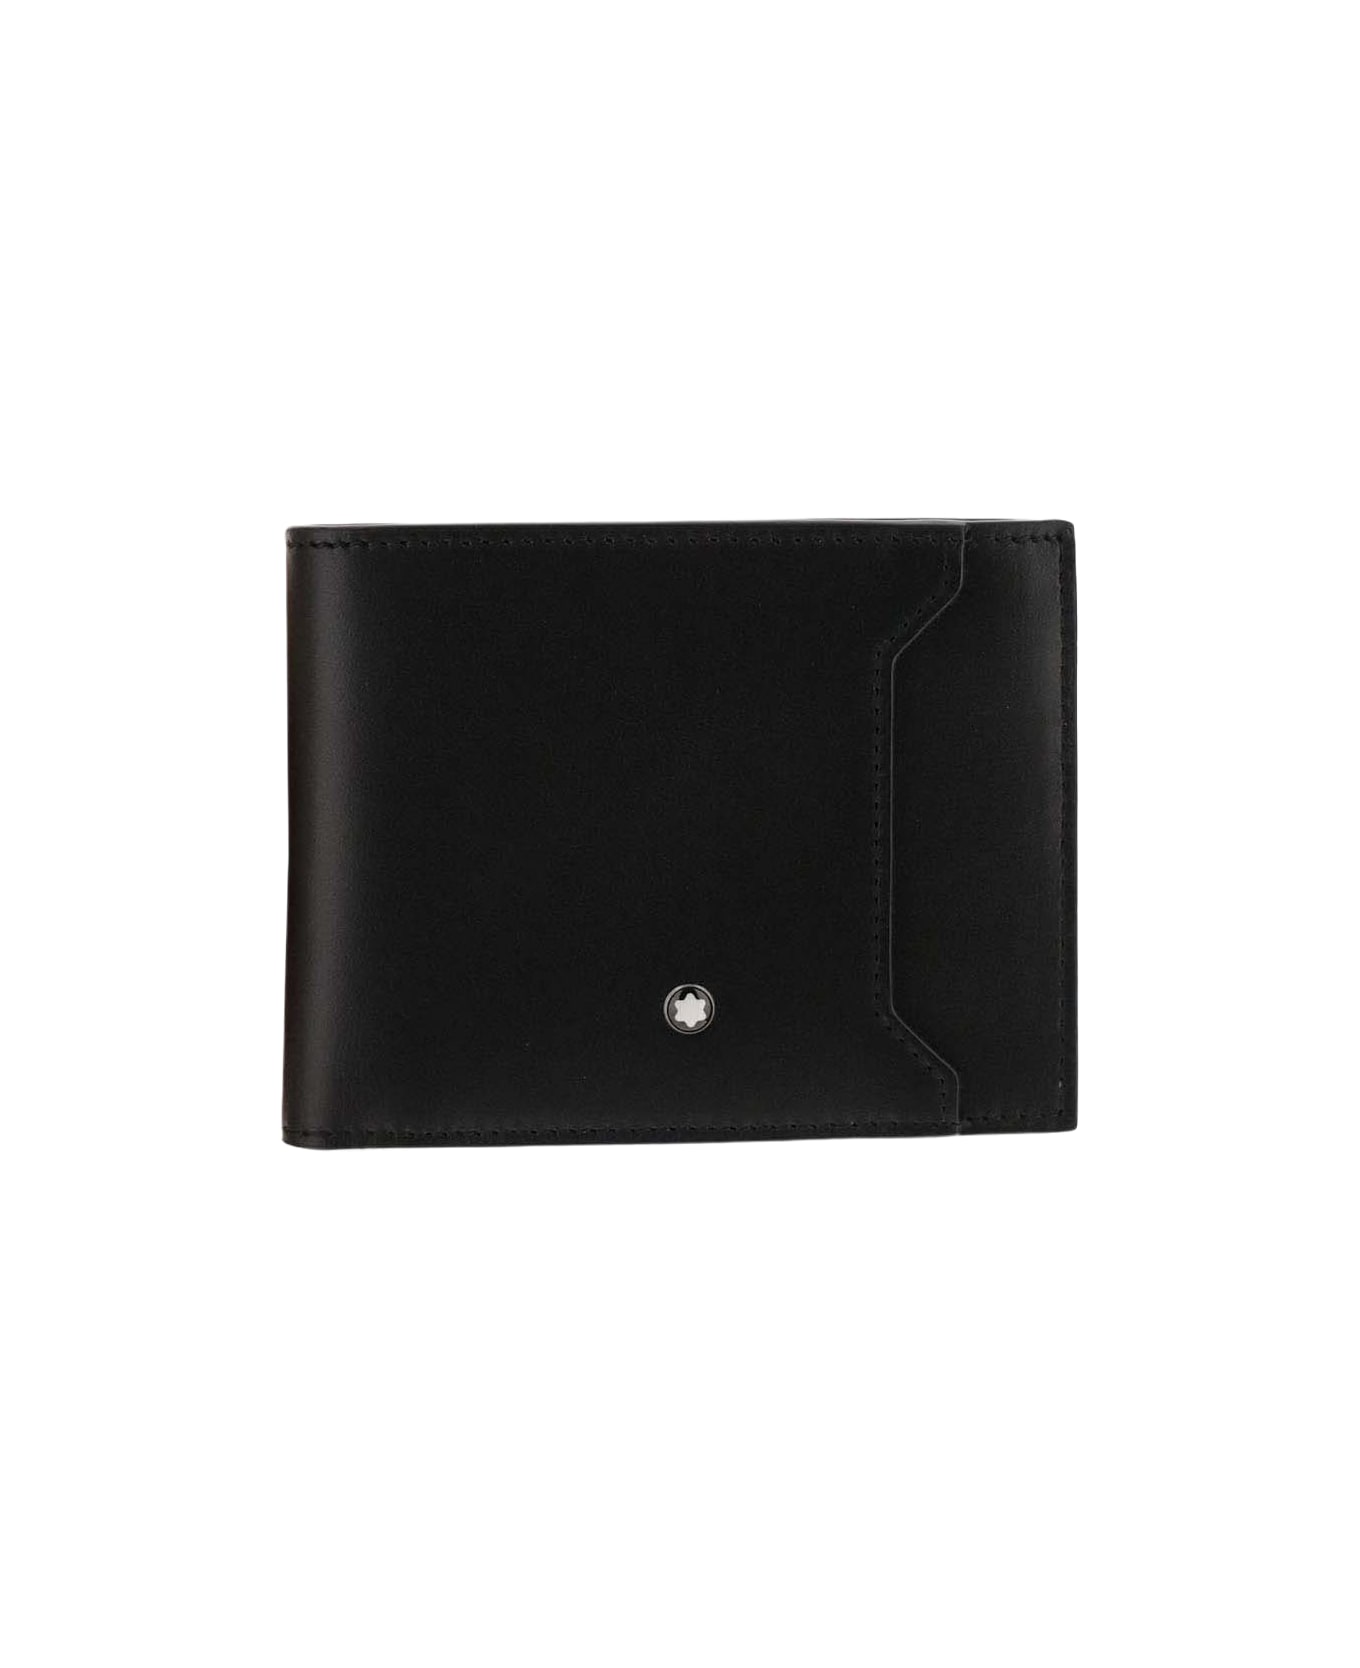 Montblanc Meisterstück Wallet Selection Soft - Black